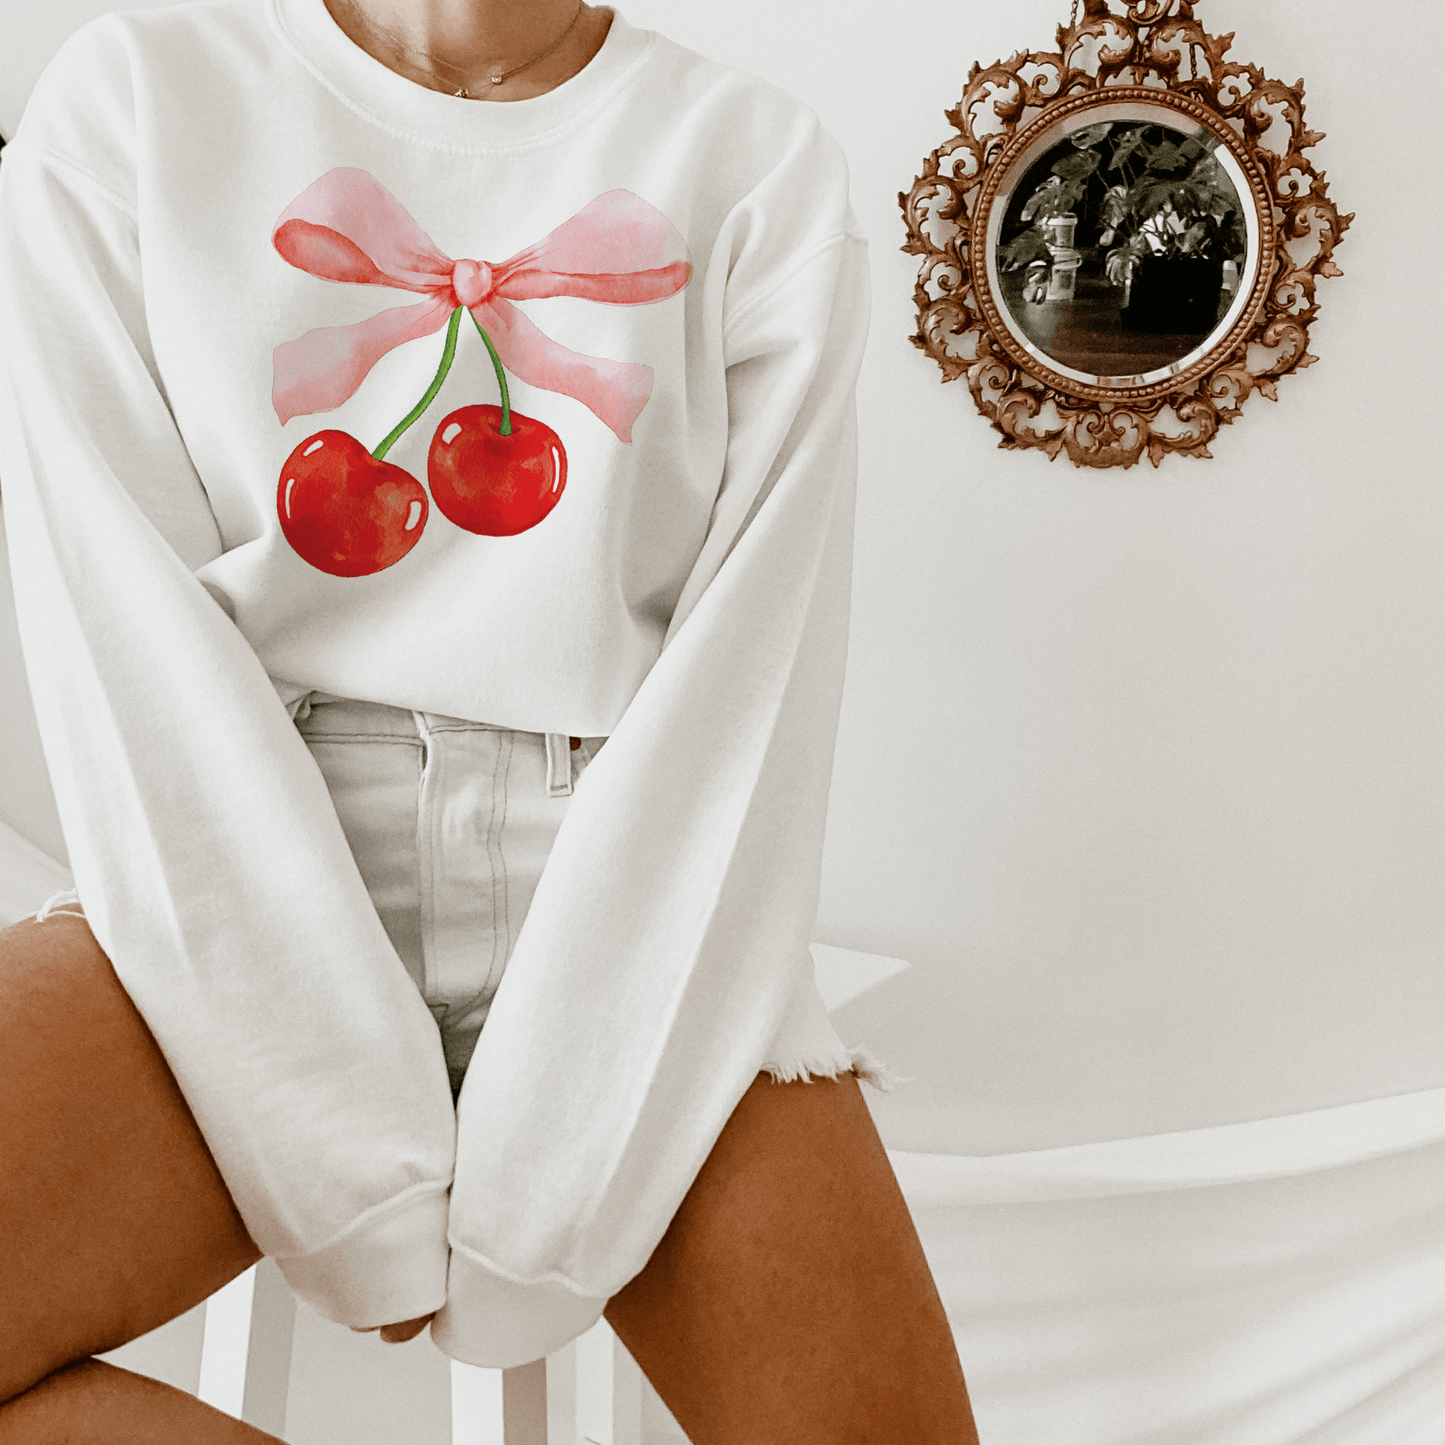 Sweet Bow Cherries Sweatshirt